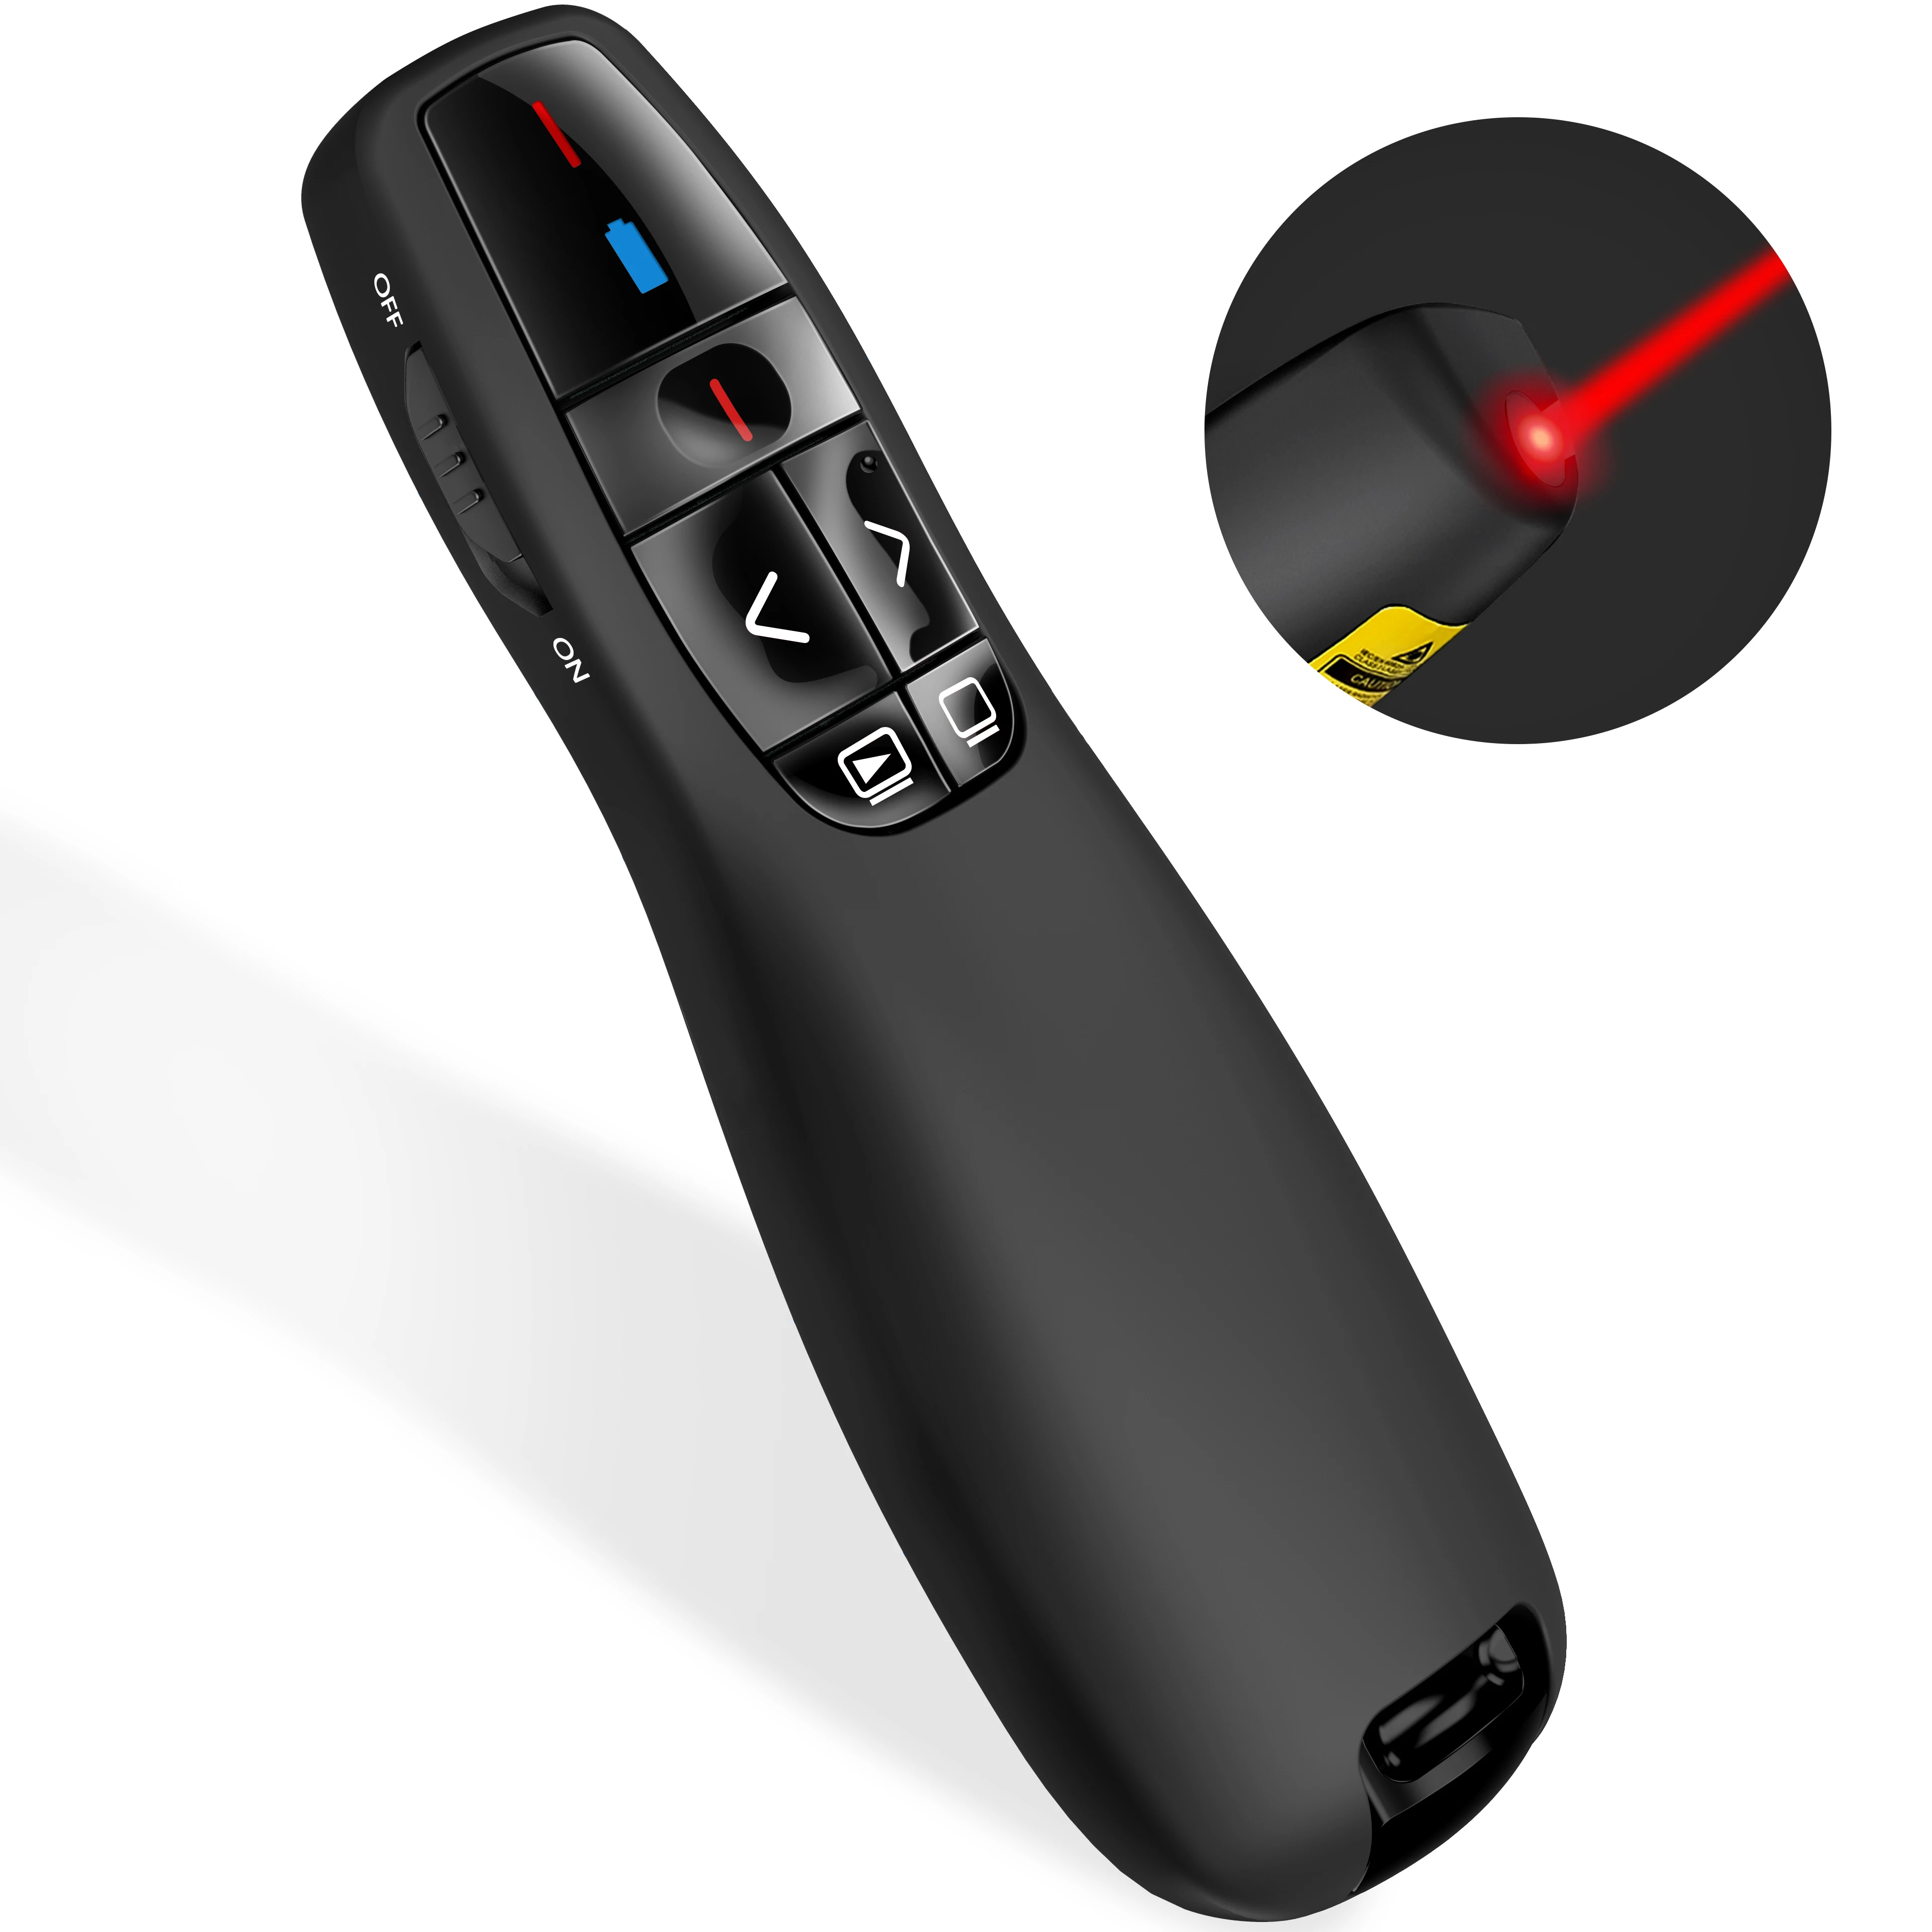 

Wireless Presenter RF 2.4GHz USB Presentation Remote Control With Red Laser Presentation Clicker for PowerPoint Keynote/PPT/Mac